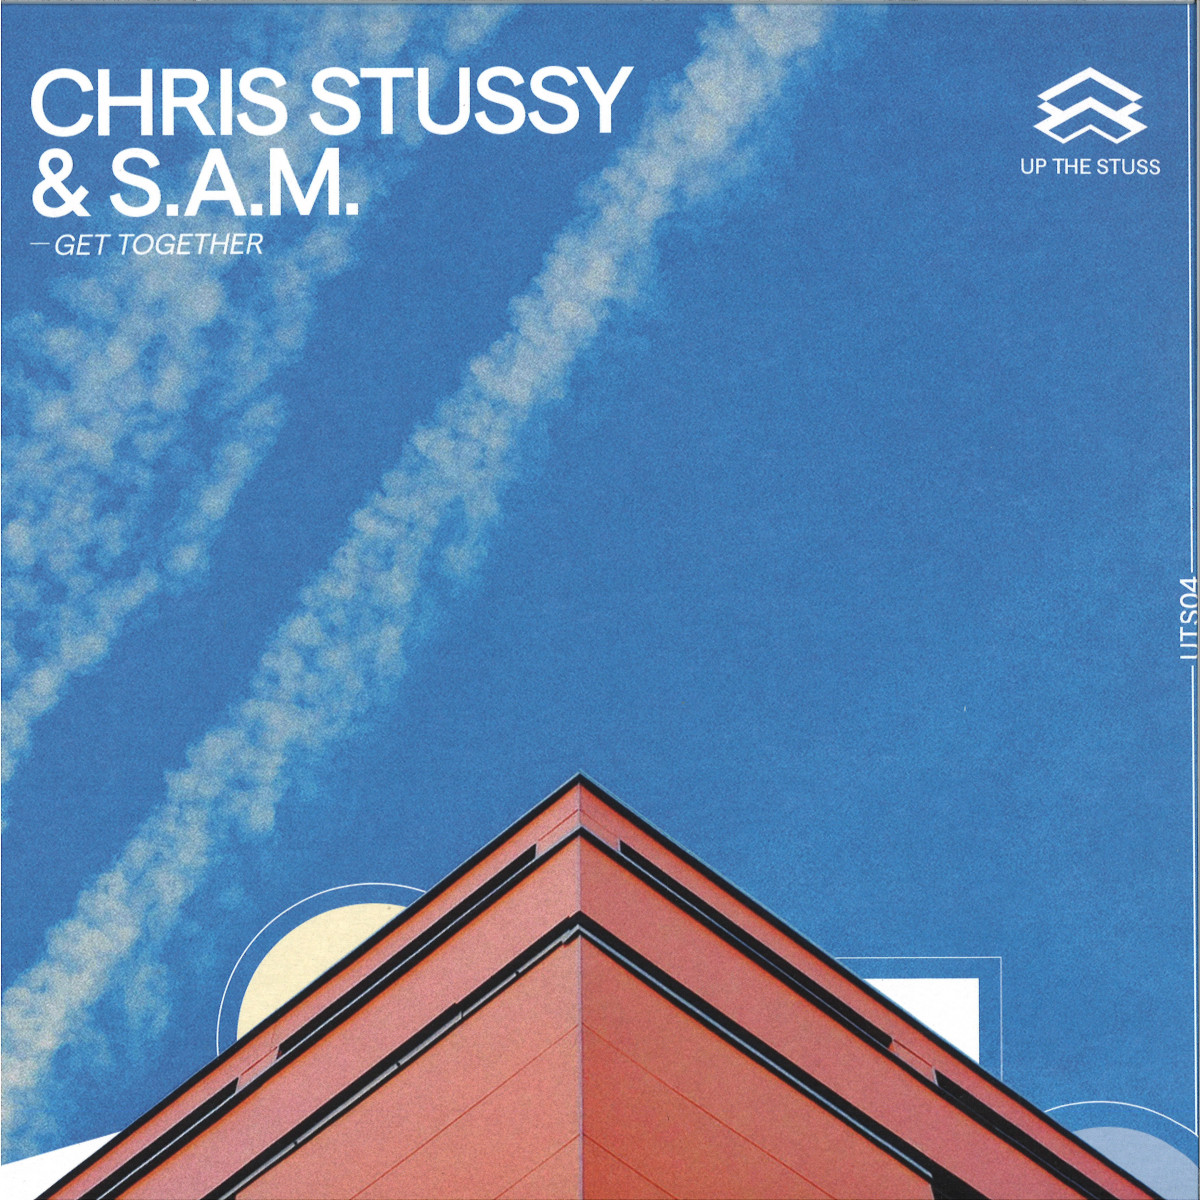 Chris Stussy & S.A.M. – Get Together